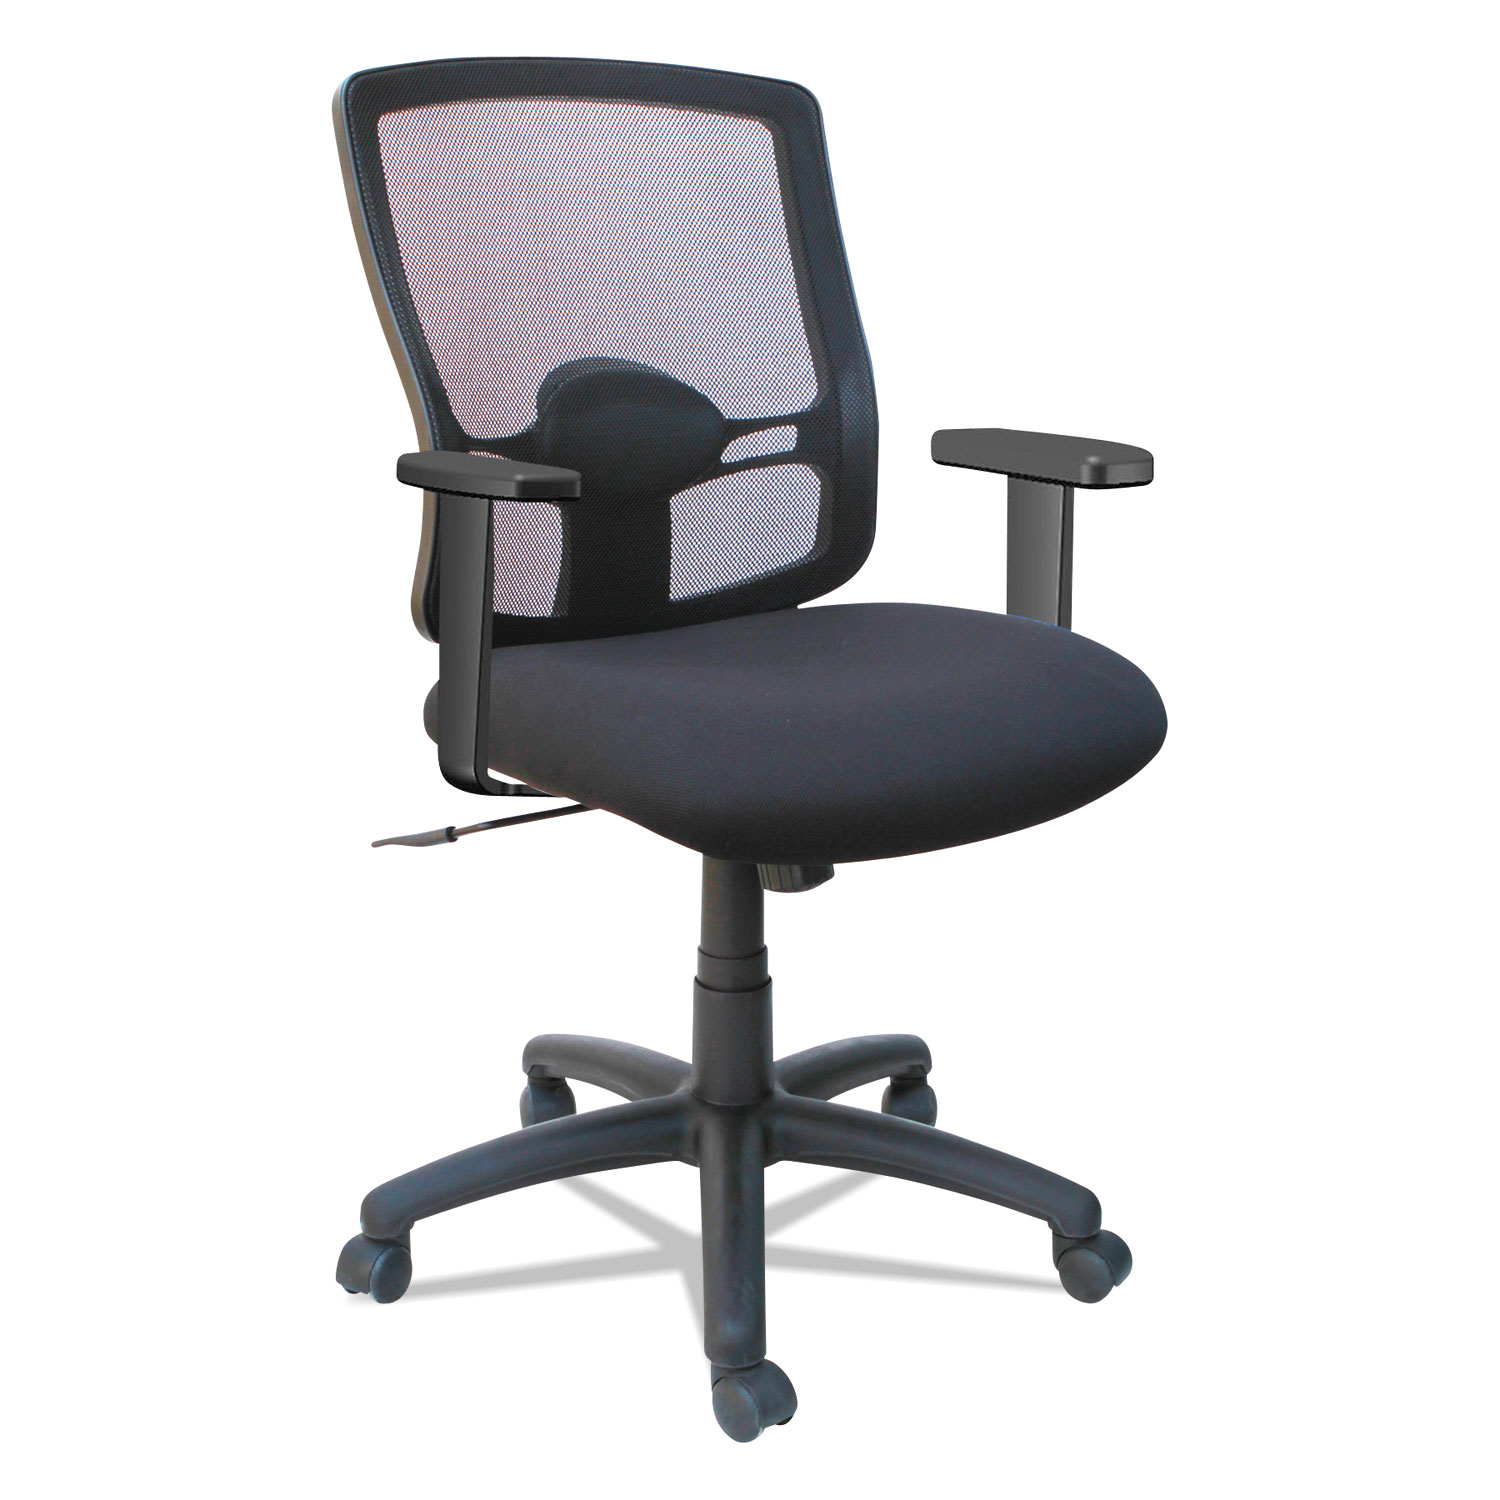  Alera ALEET4017B Alera Etros Series Mesh Mid-Back Petite Swivel/Tilt Chair, Supports up to 275 lbs., Black Seat/Black Back, Black Base (ALEET4017B) 